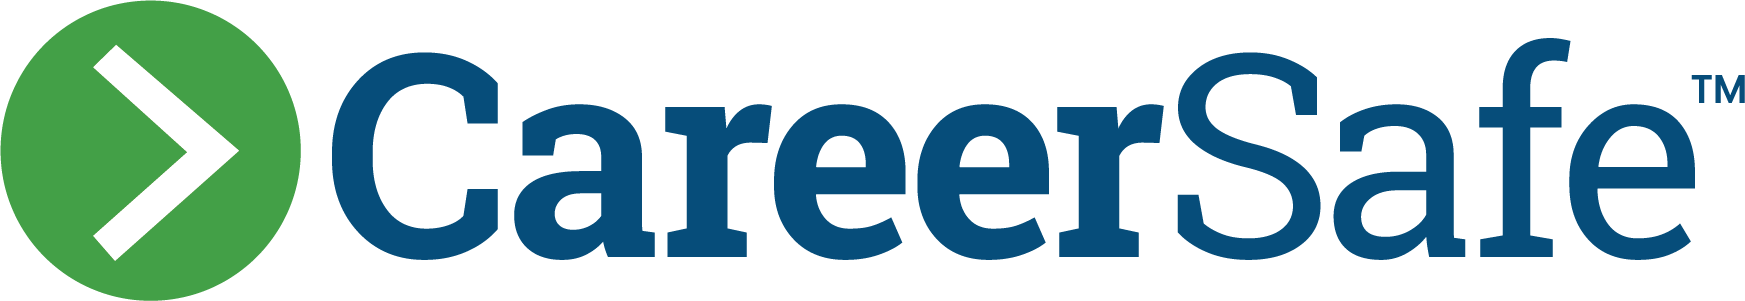 CareerSafe logo